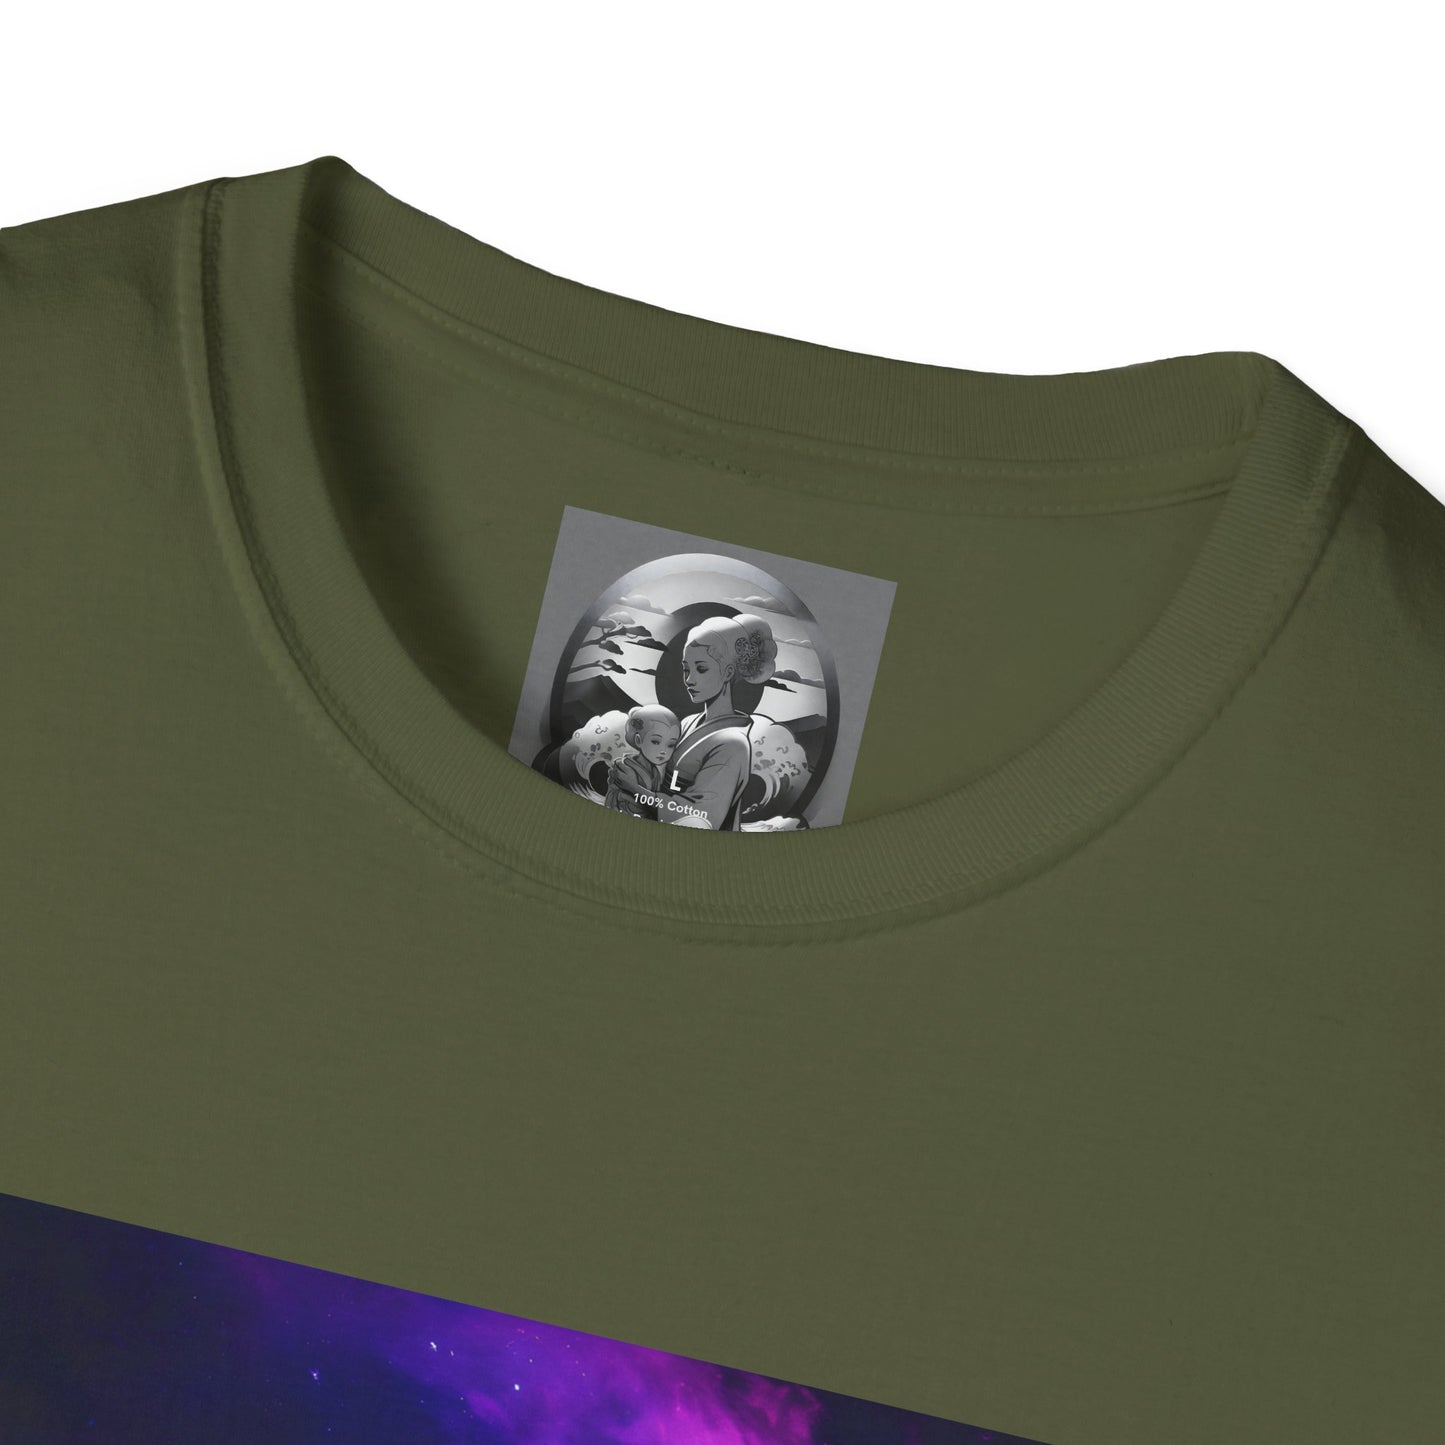 "Goodnight space cowboy" Single Print Unisex Softstyle T-Shirt